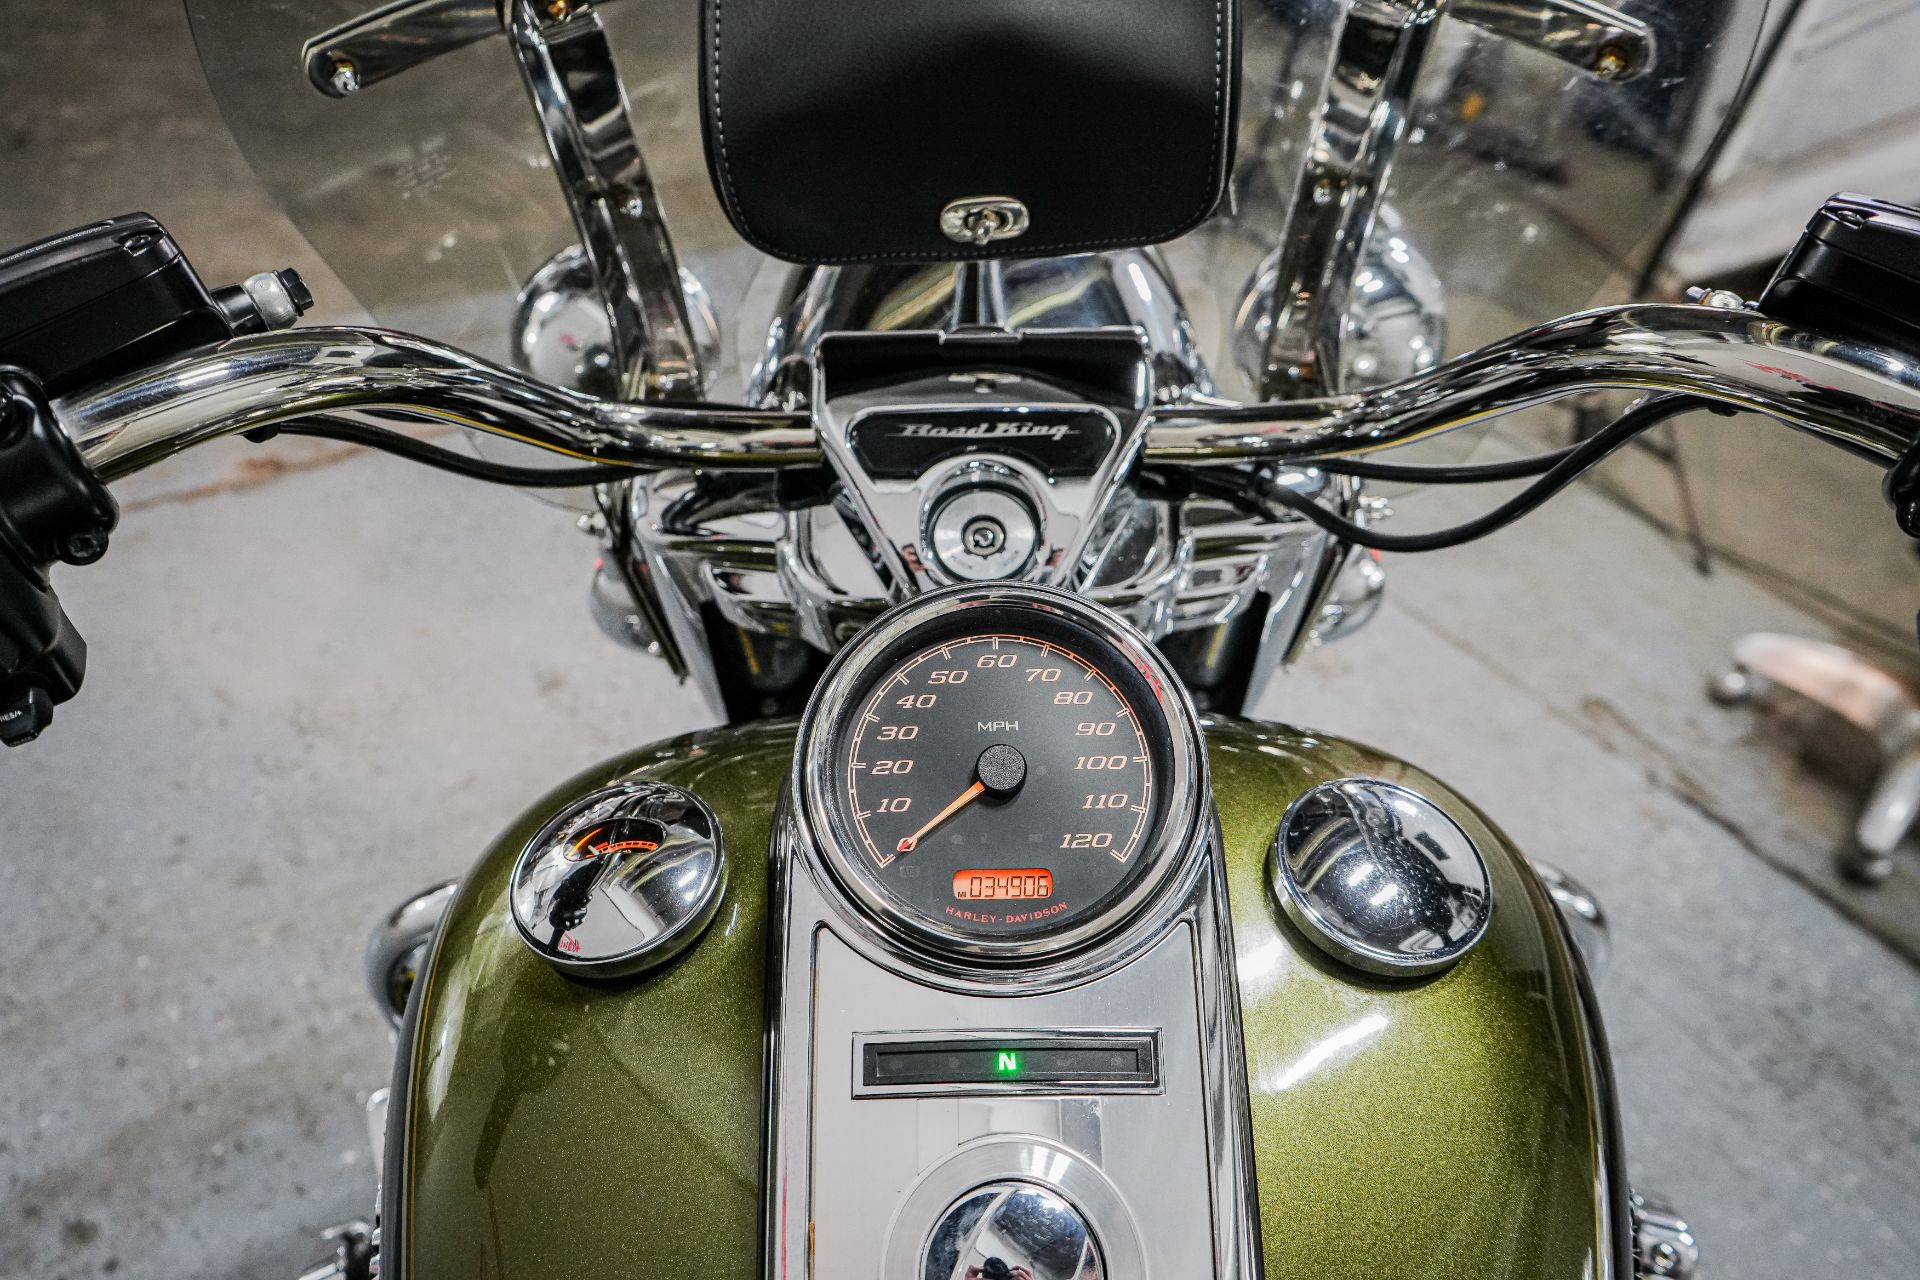 2018 Harley-Davidson Road King® in Sacramento, California - Photo 9